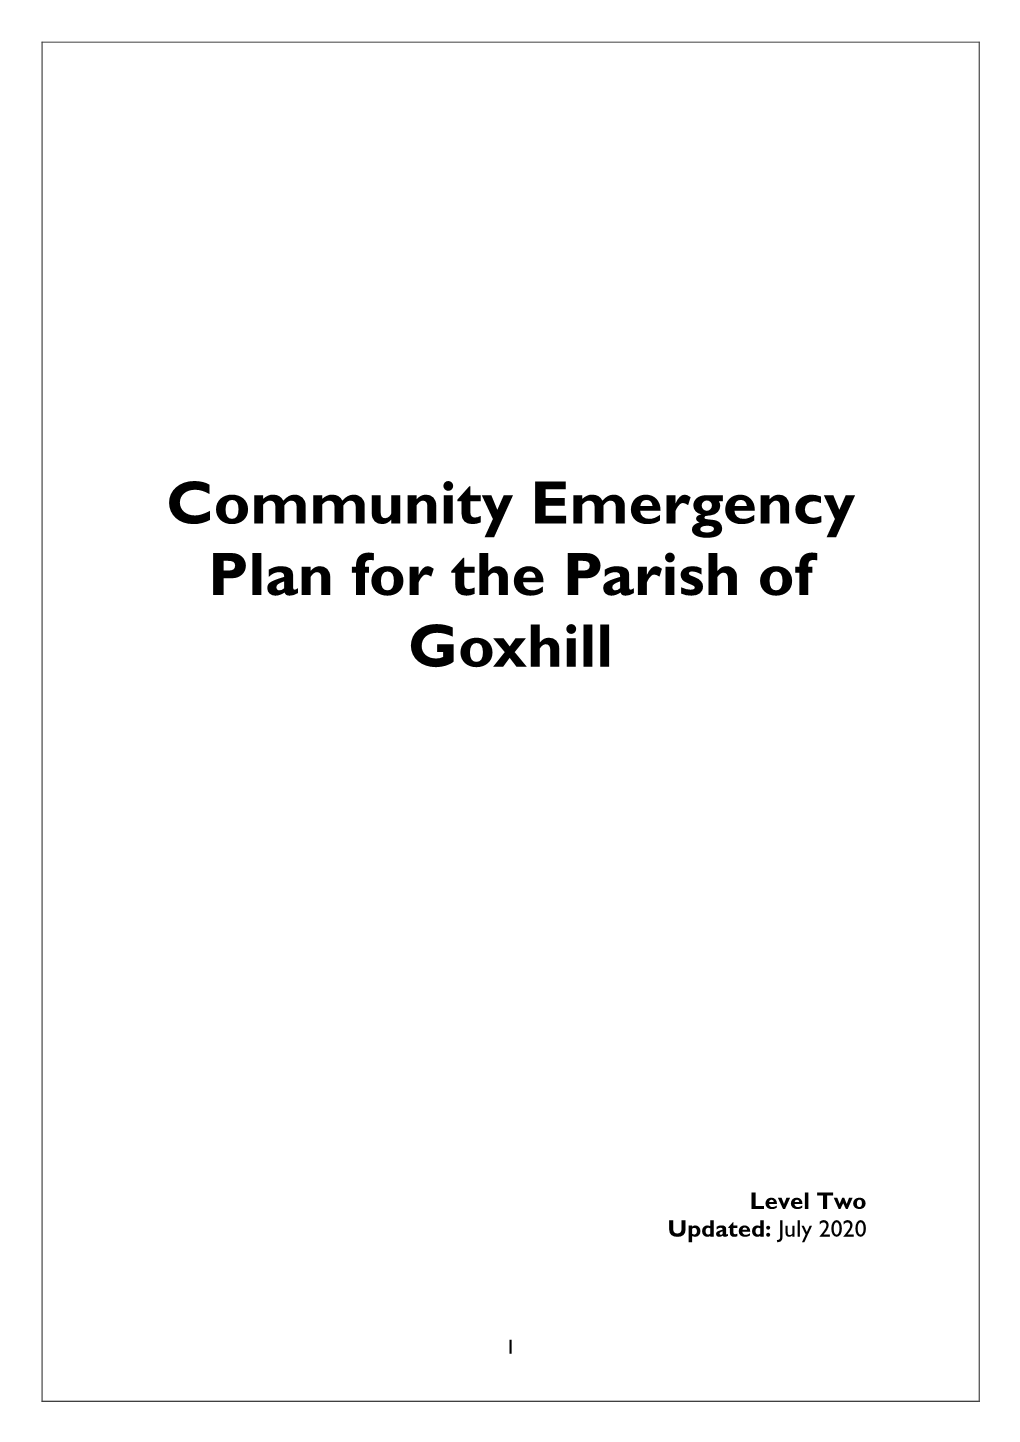 Community Emergency Plan for the Parish of Goxhill